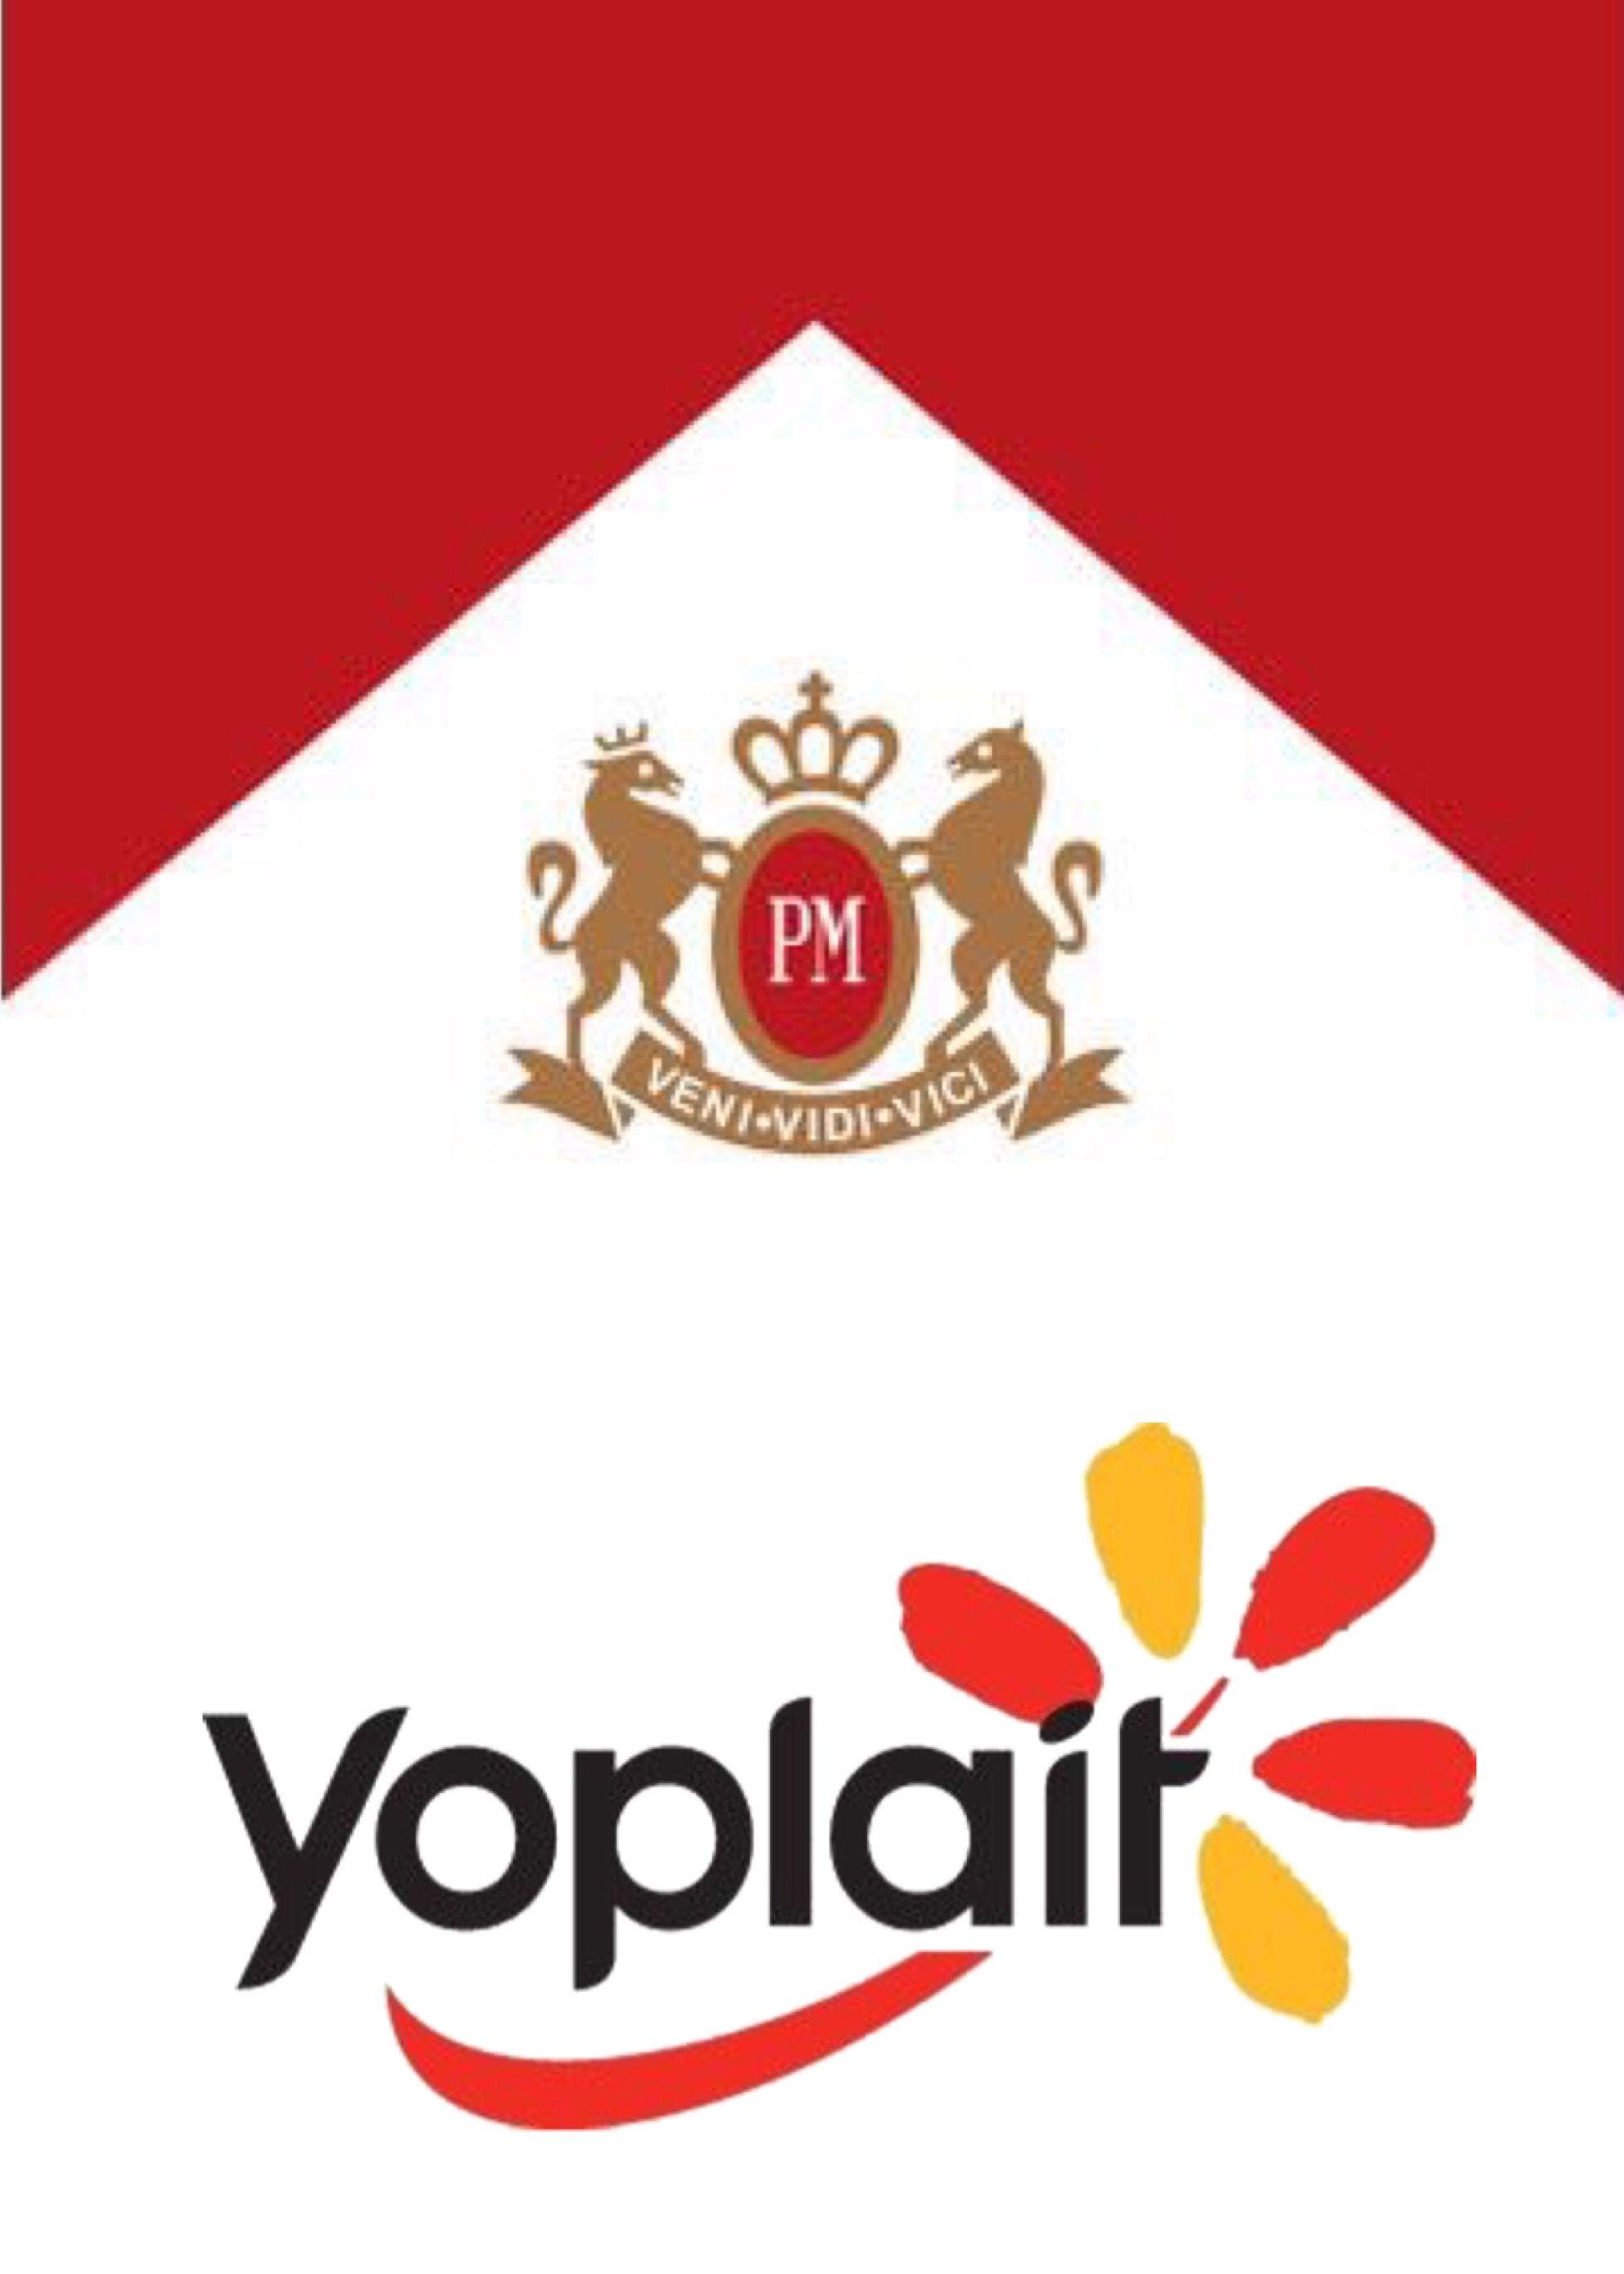 Yoplait Logo - Yoplait Marlboro | Logos | Pinterest | Logos